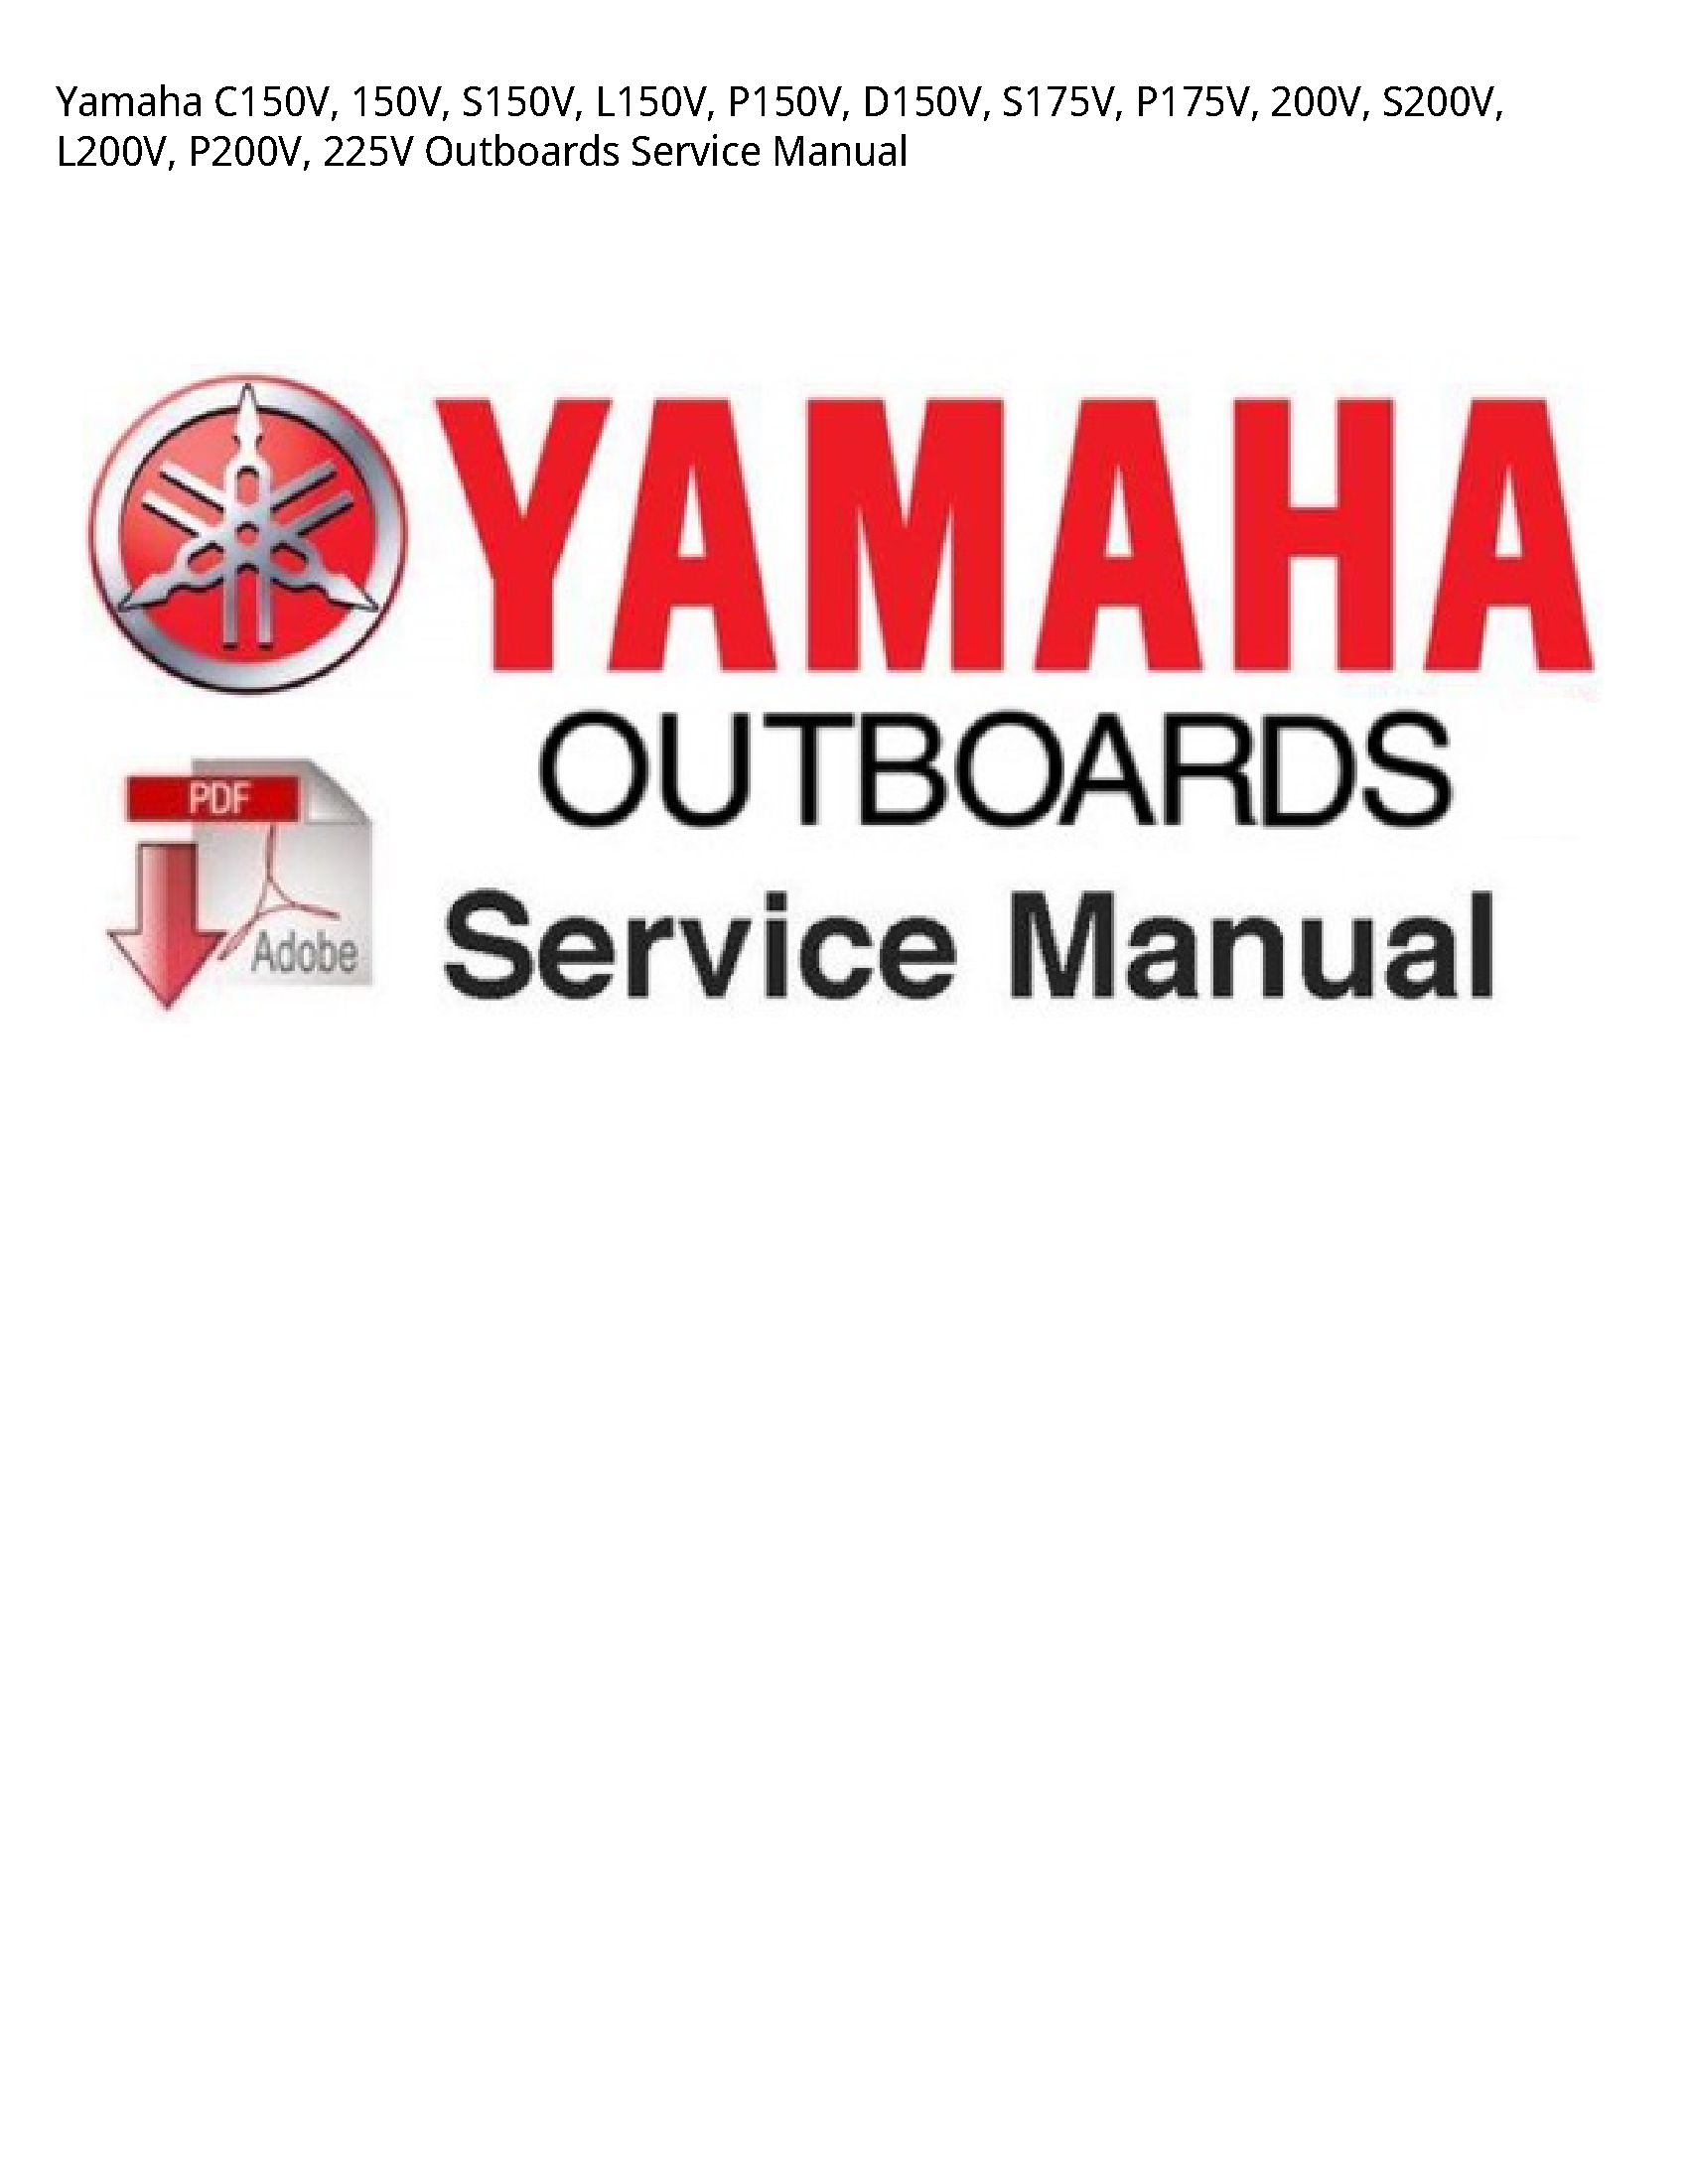 Yamaha C150V Outboards Service manual